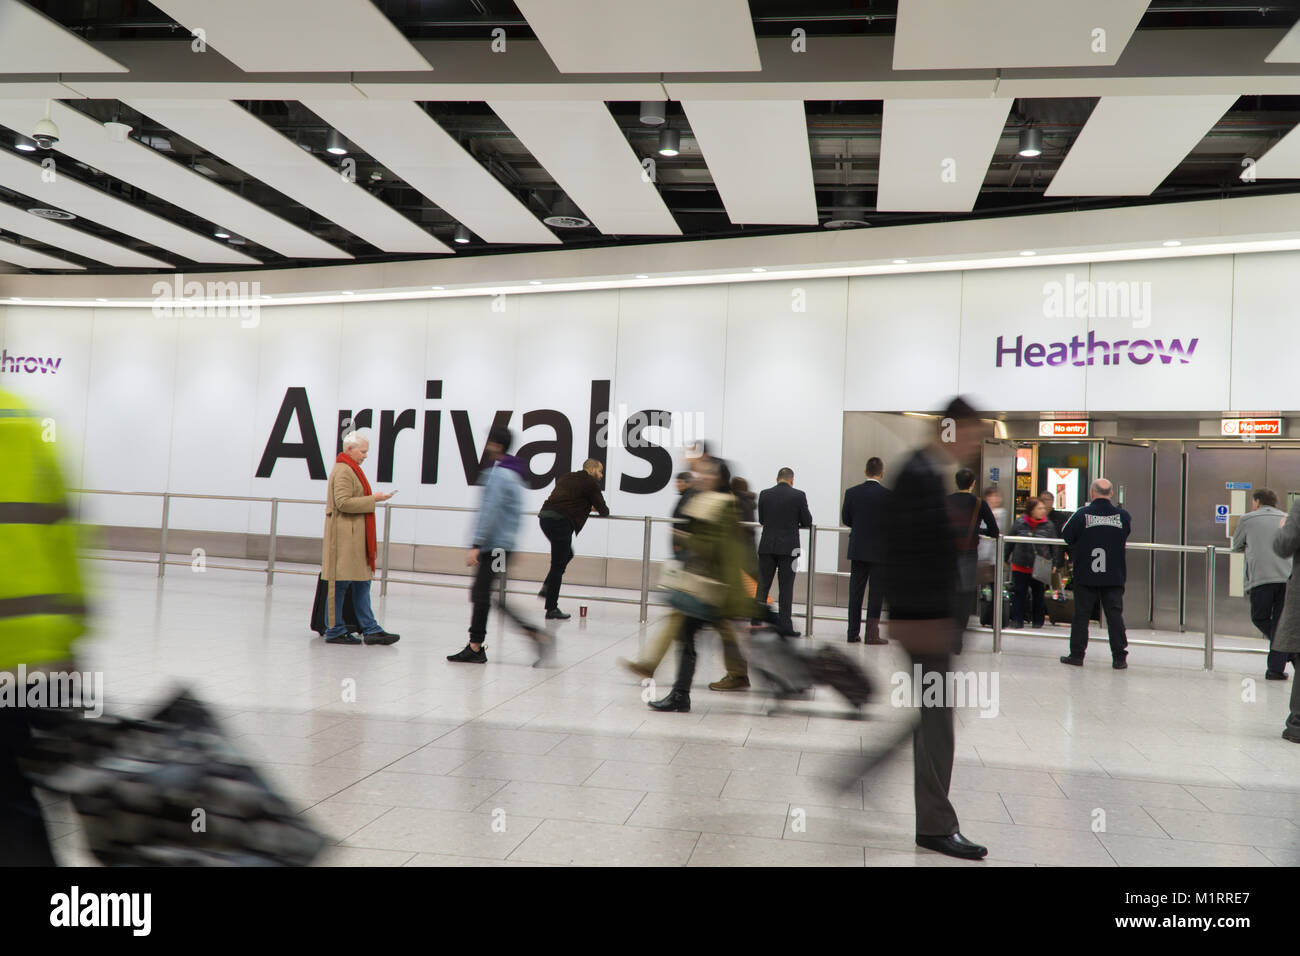 Langsame Verschlusszeit der Kamera Bewegung im Ankunftsbereich Heathrow Terminal 4, England betonen Stockfoto